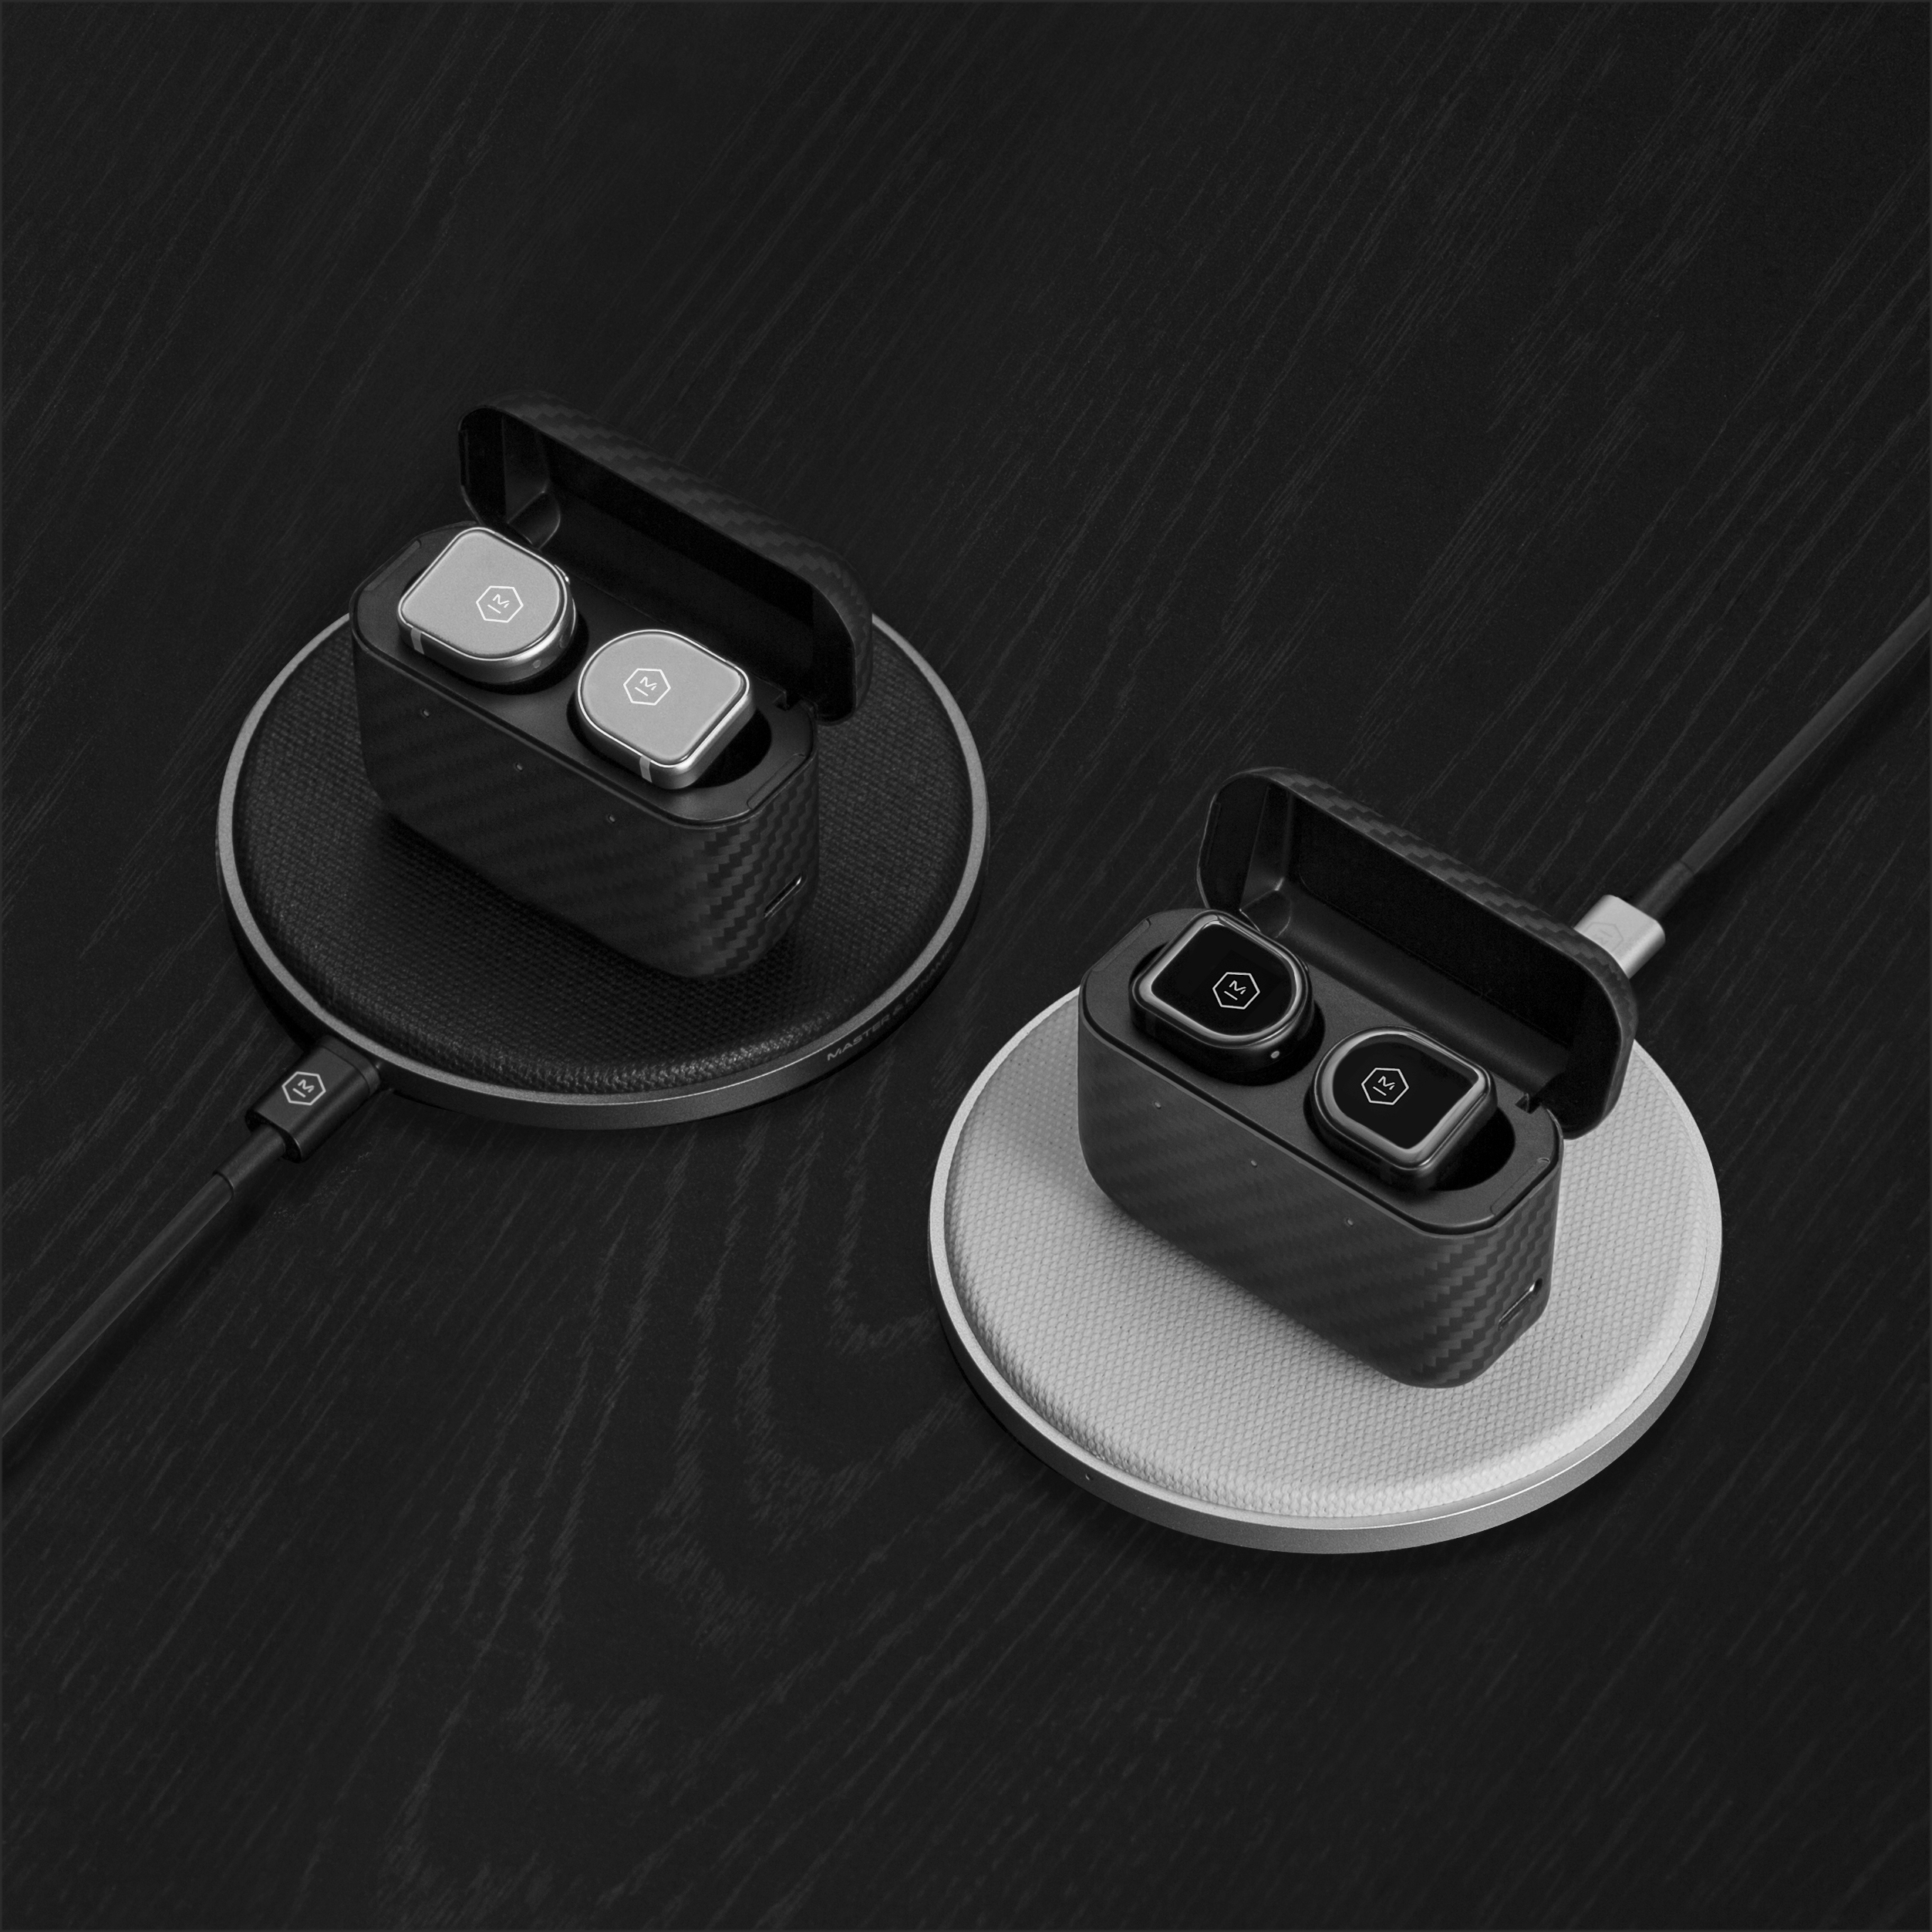 The MW08 Sport True Wireless Earphones in White and Black 